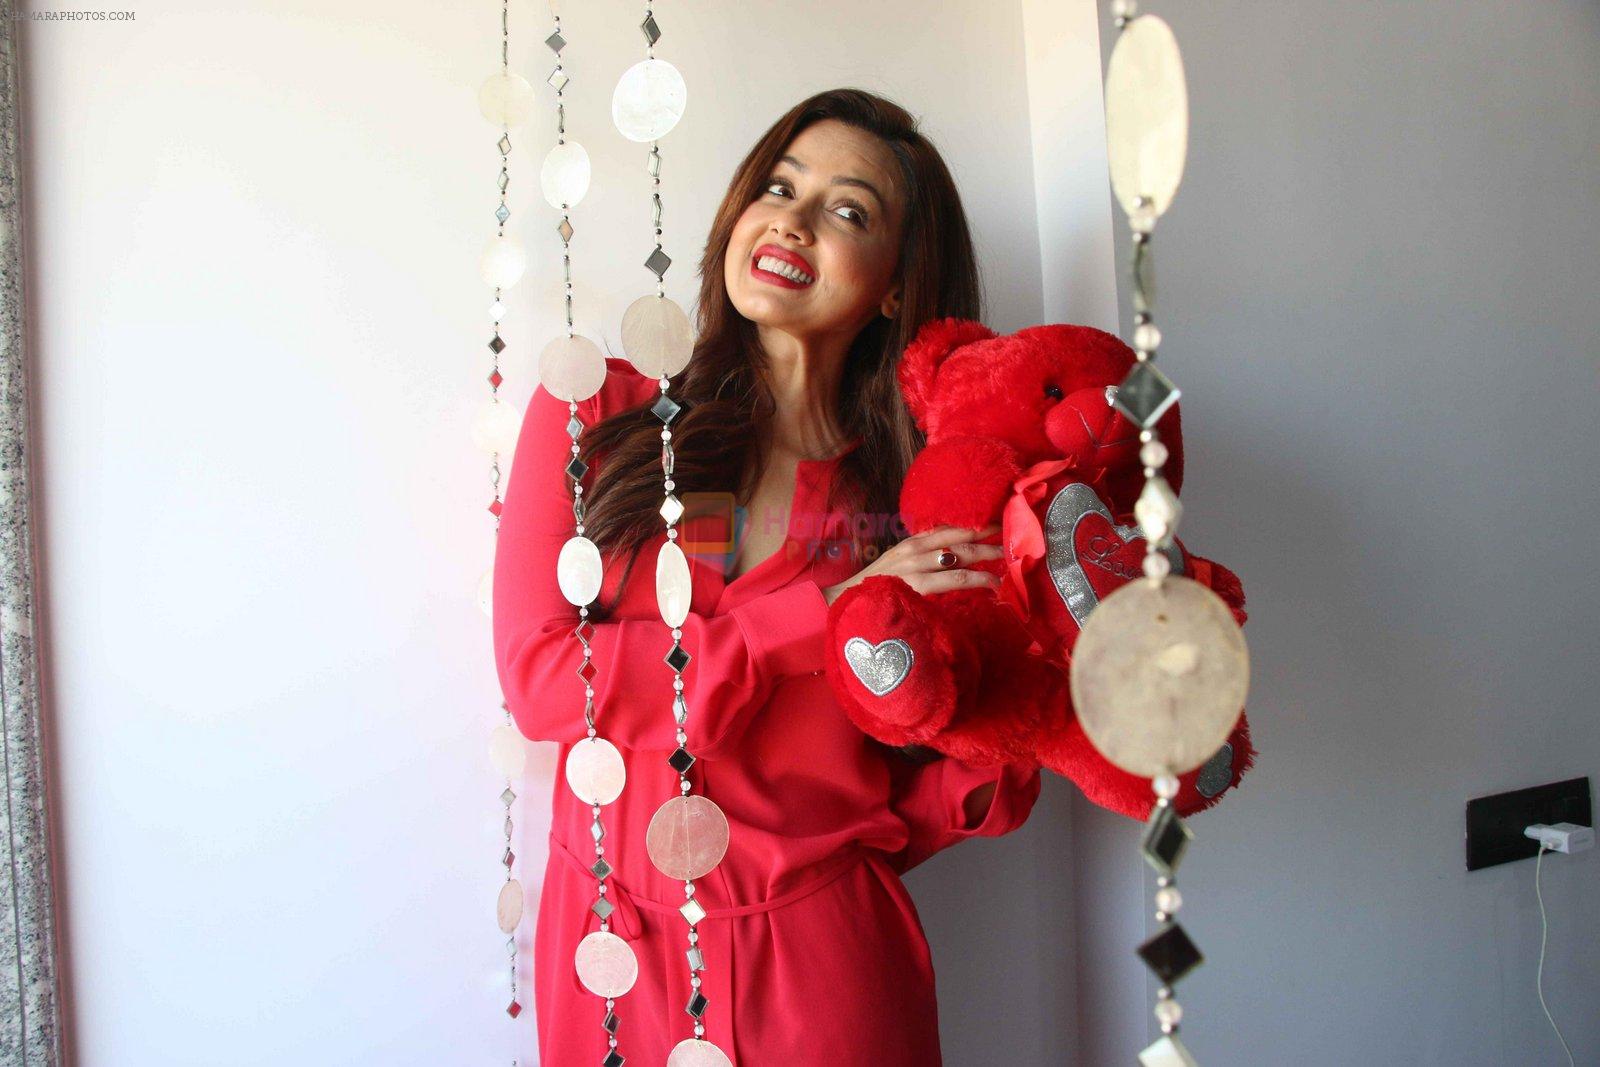 Sana Khan at valentine photo shoot on 11th Feb 2016